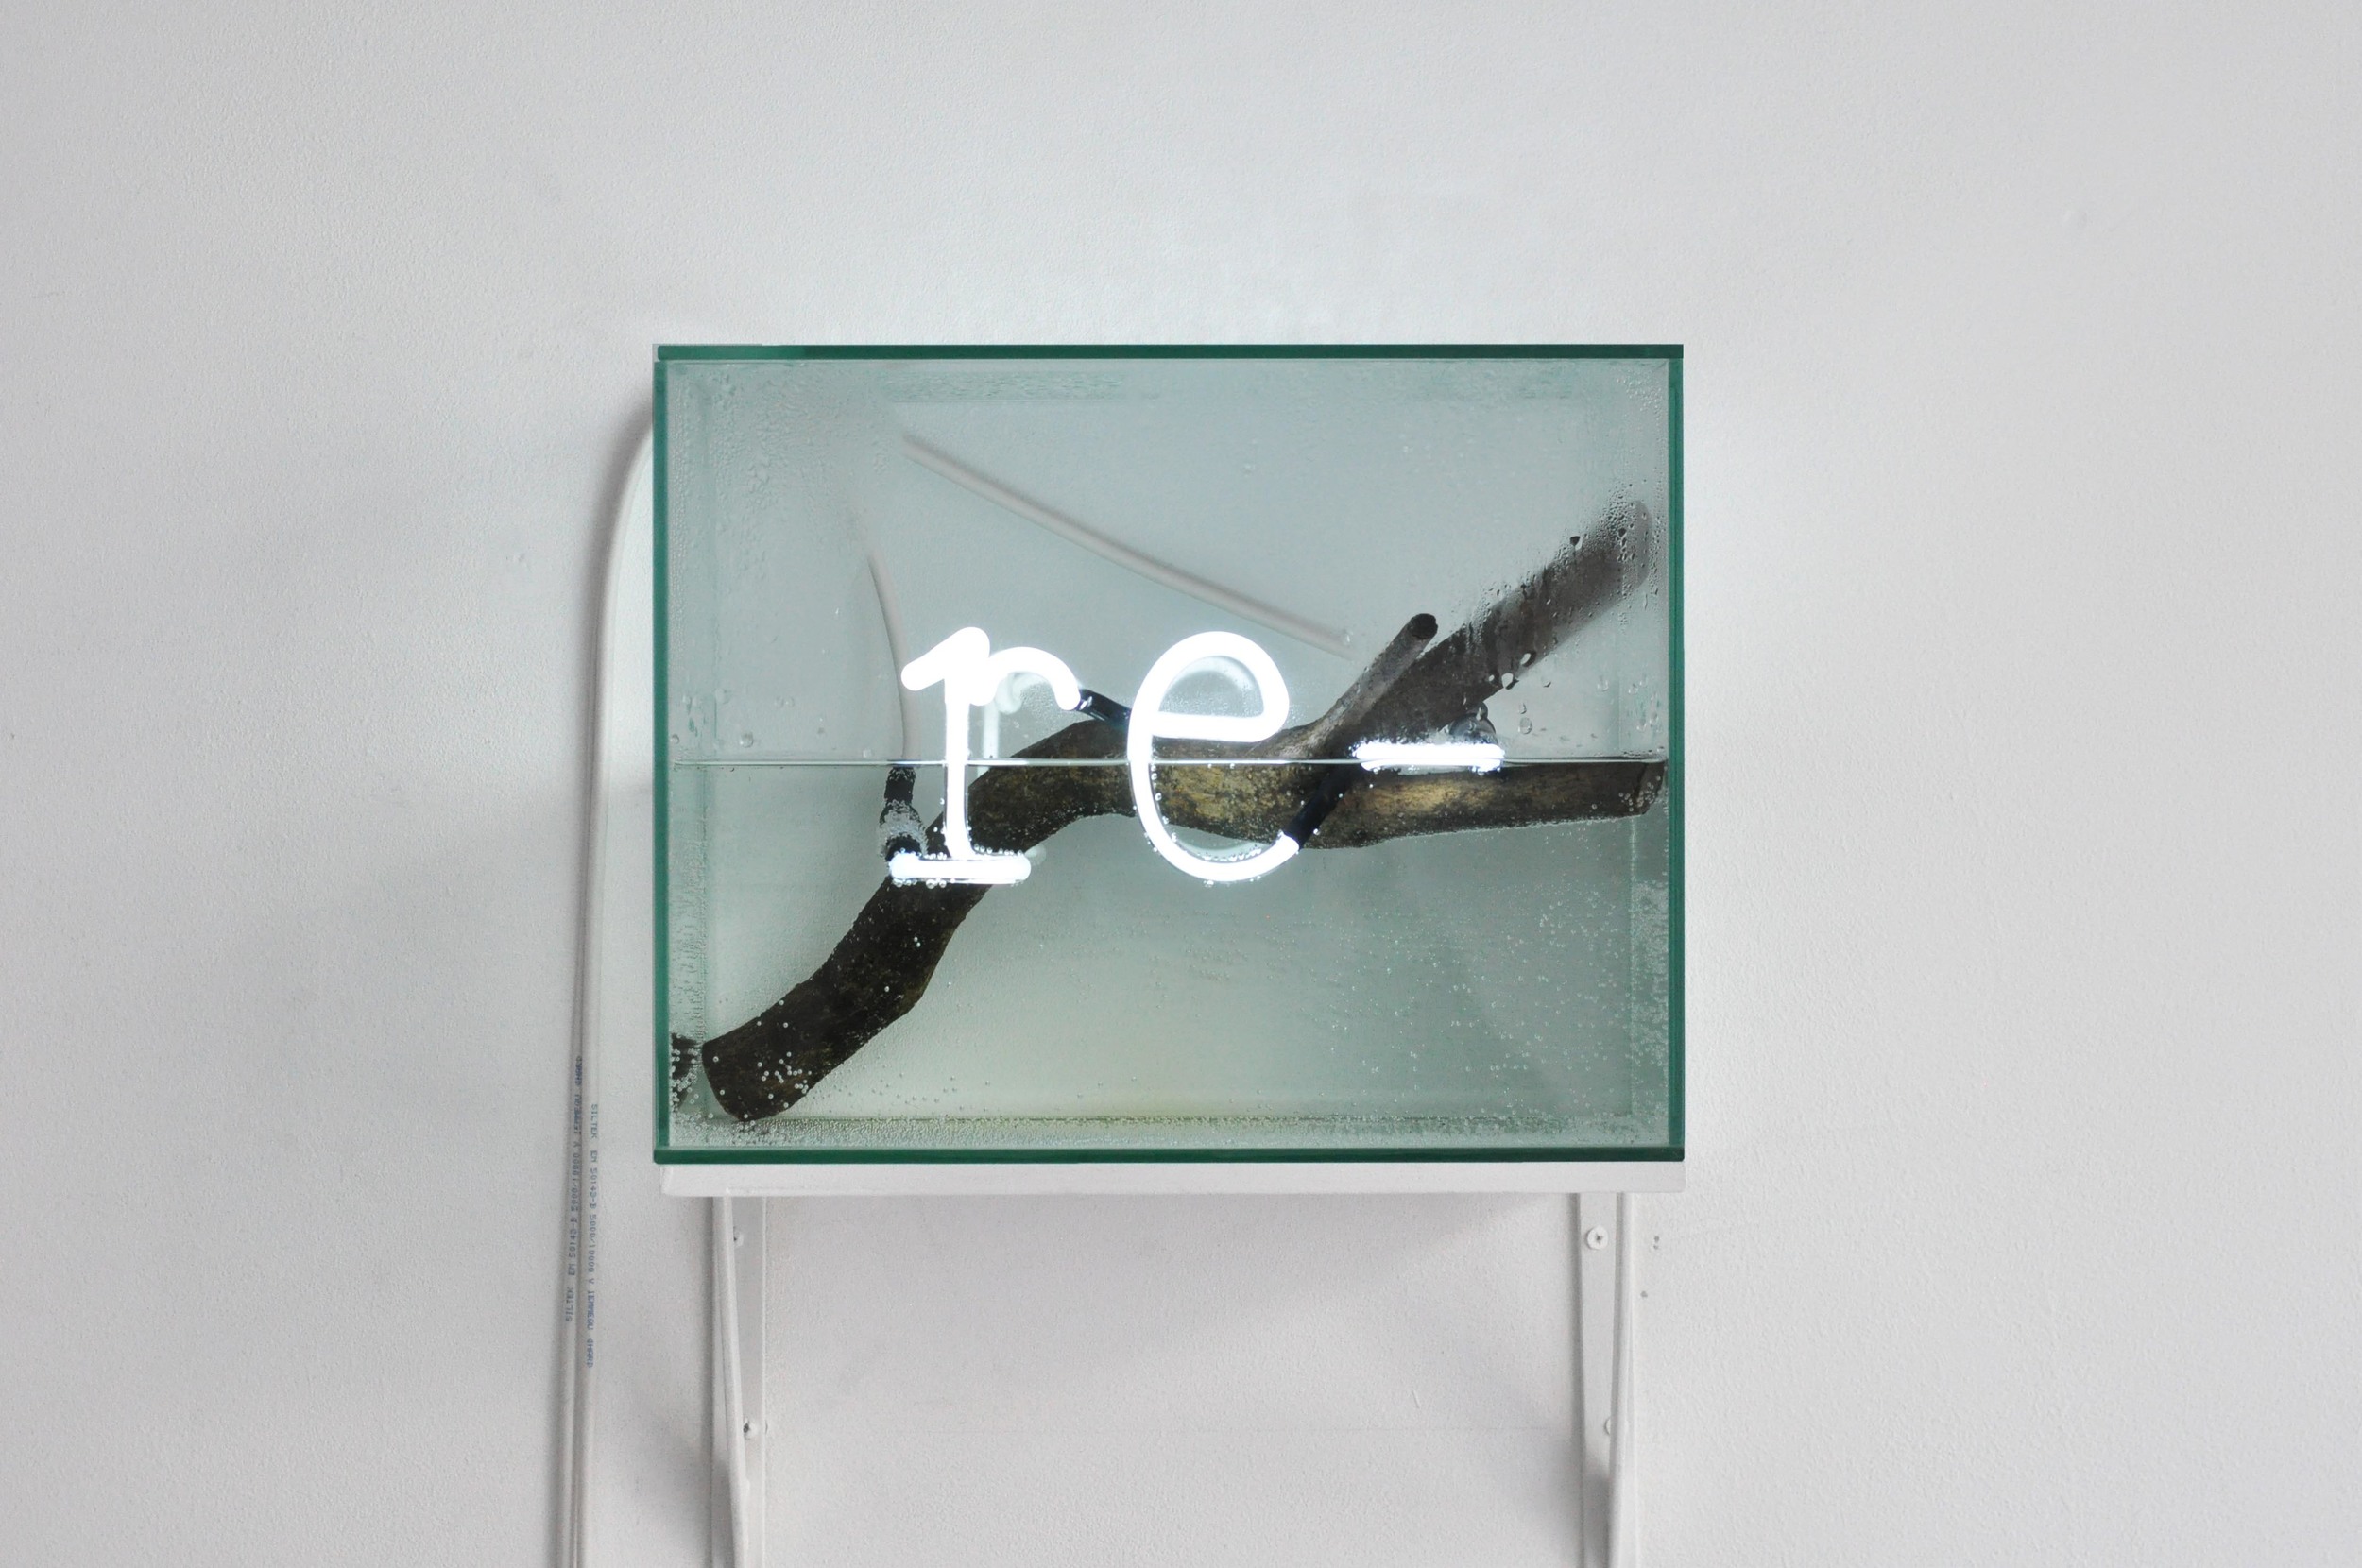   re -,&nbsp; 2015-16 neon, water, glass, wood 34 x 27 x 20 cm 